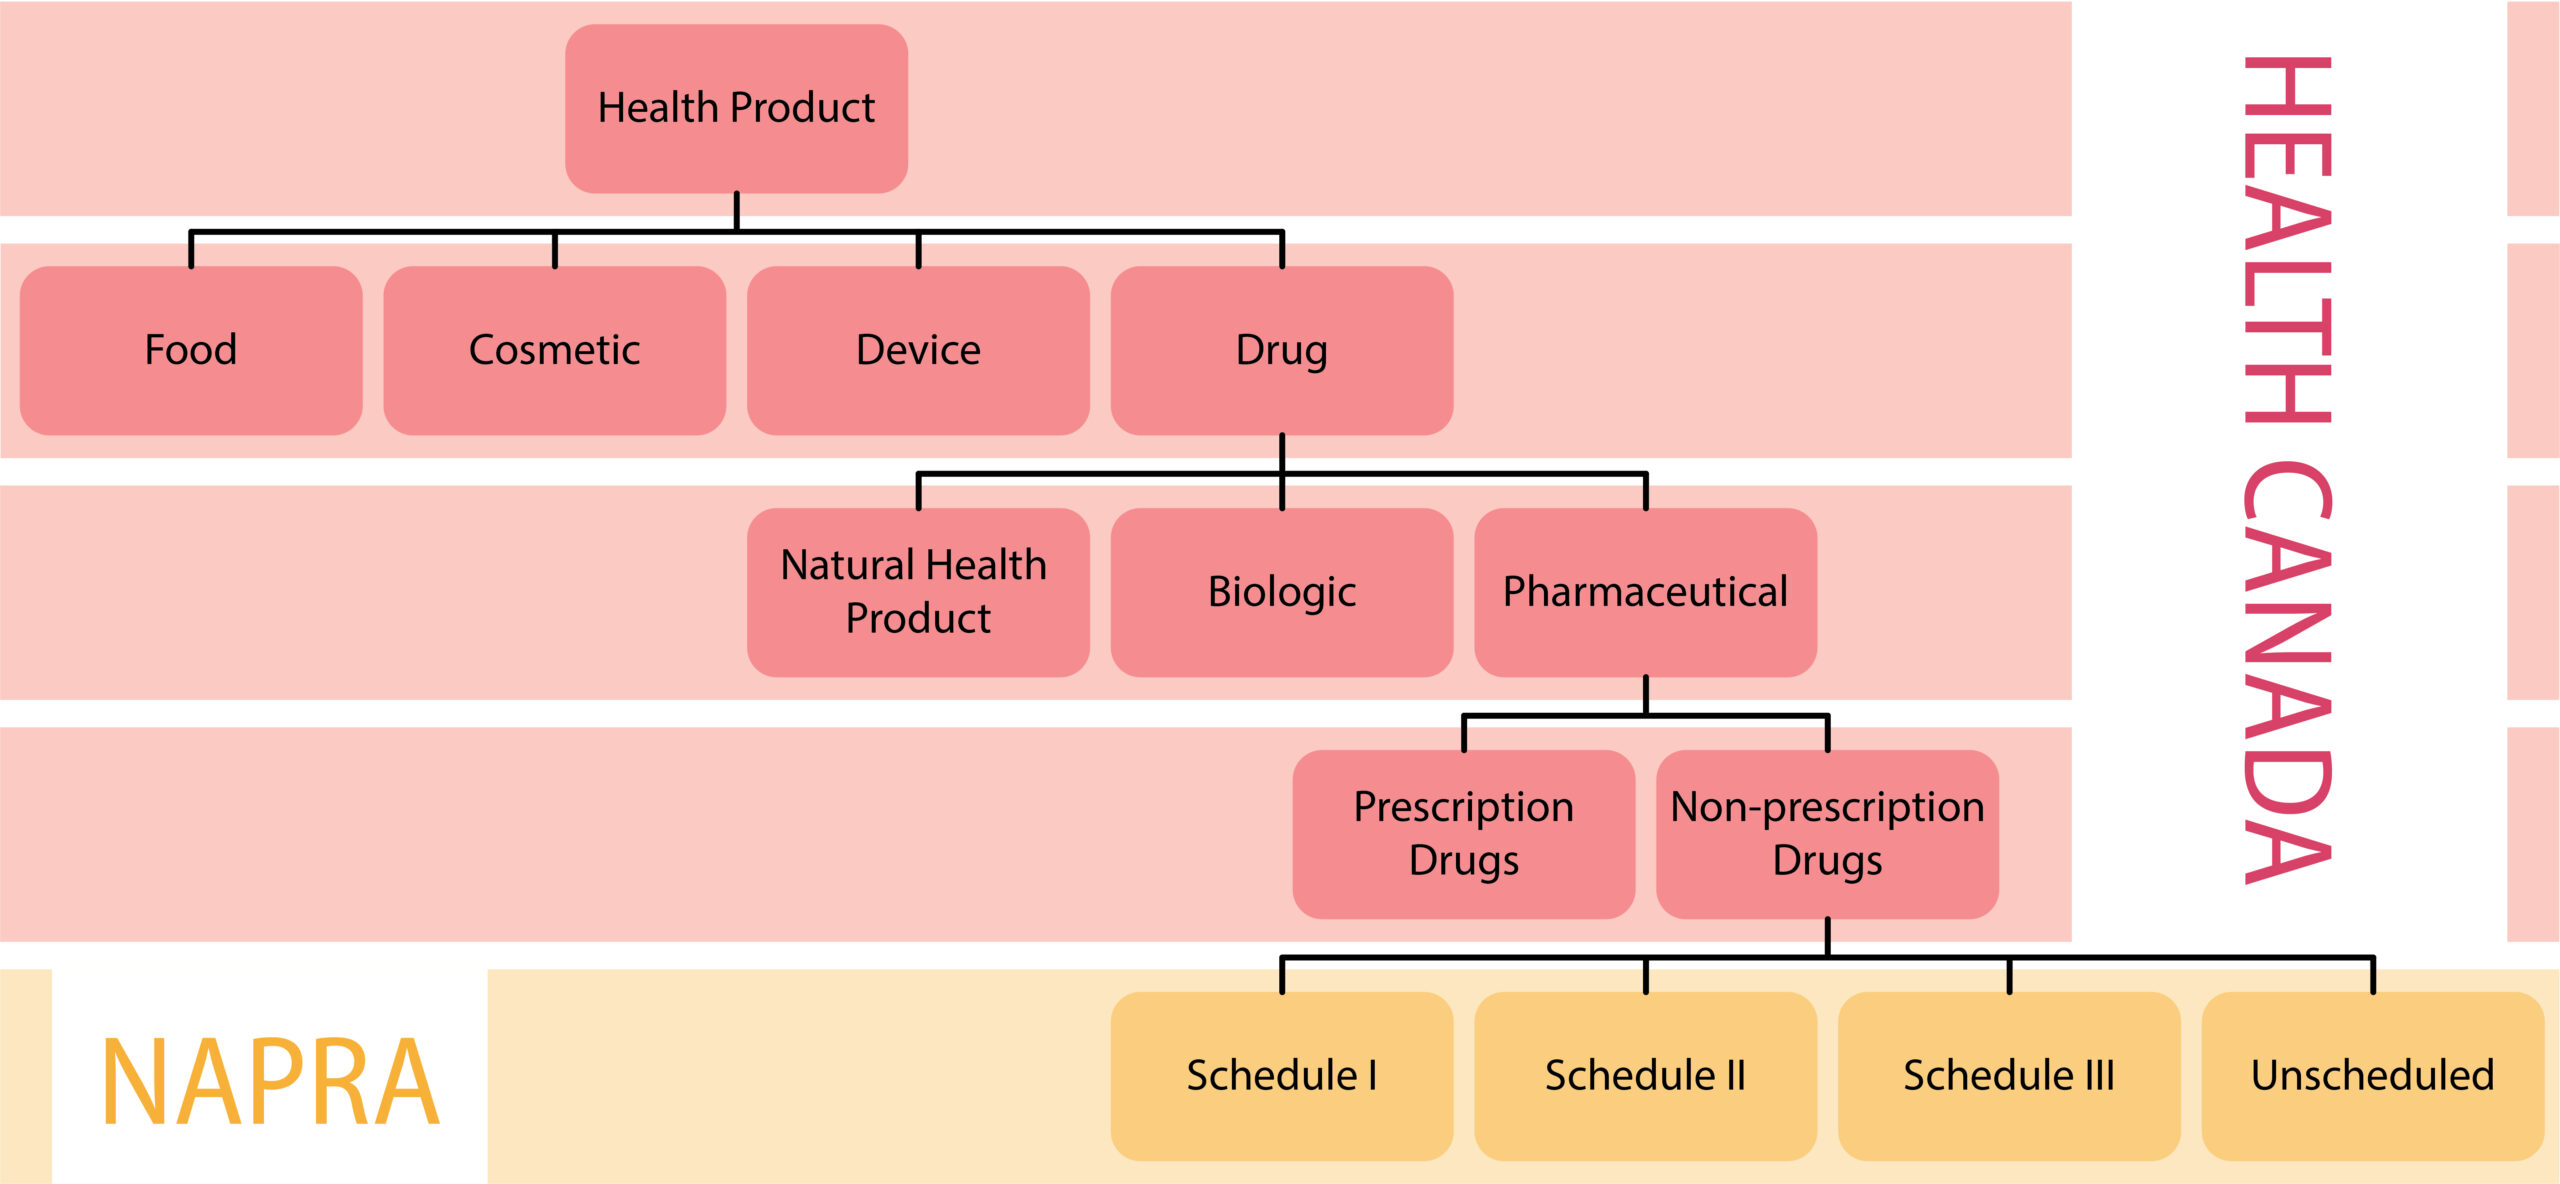 provincial-drug-schedules-newfoundland-labrador-pharmacy-board